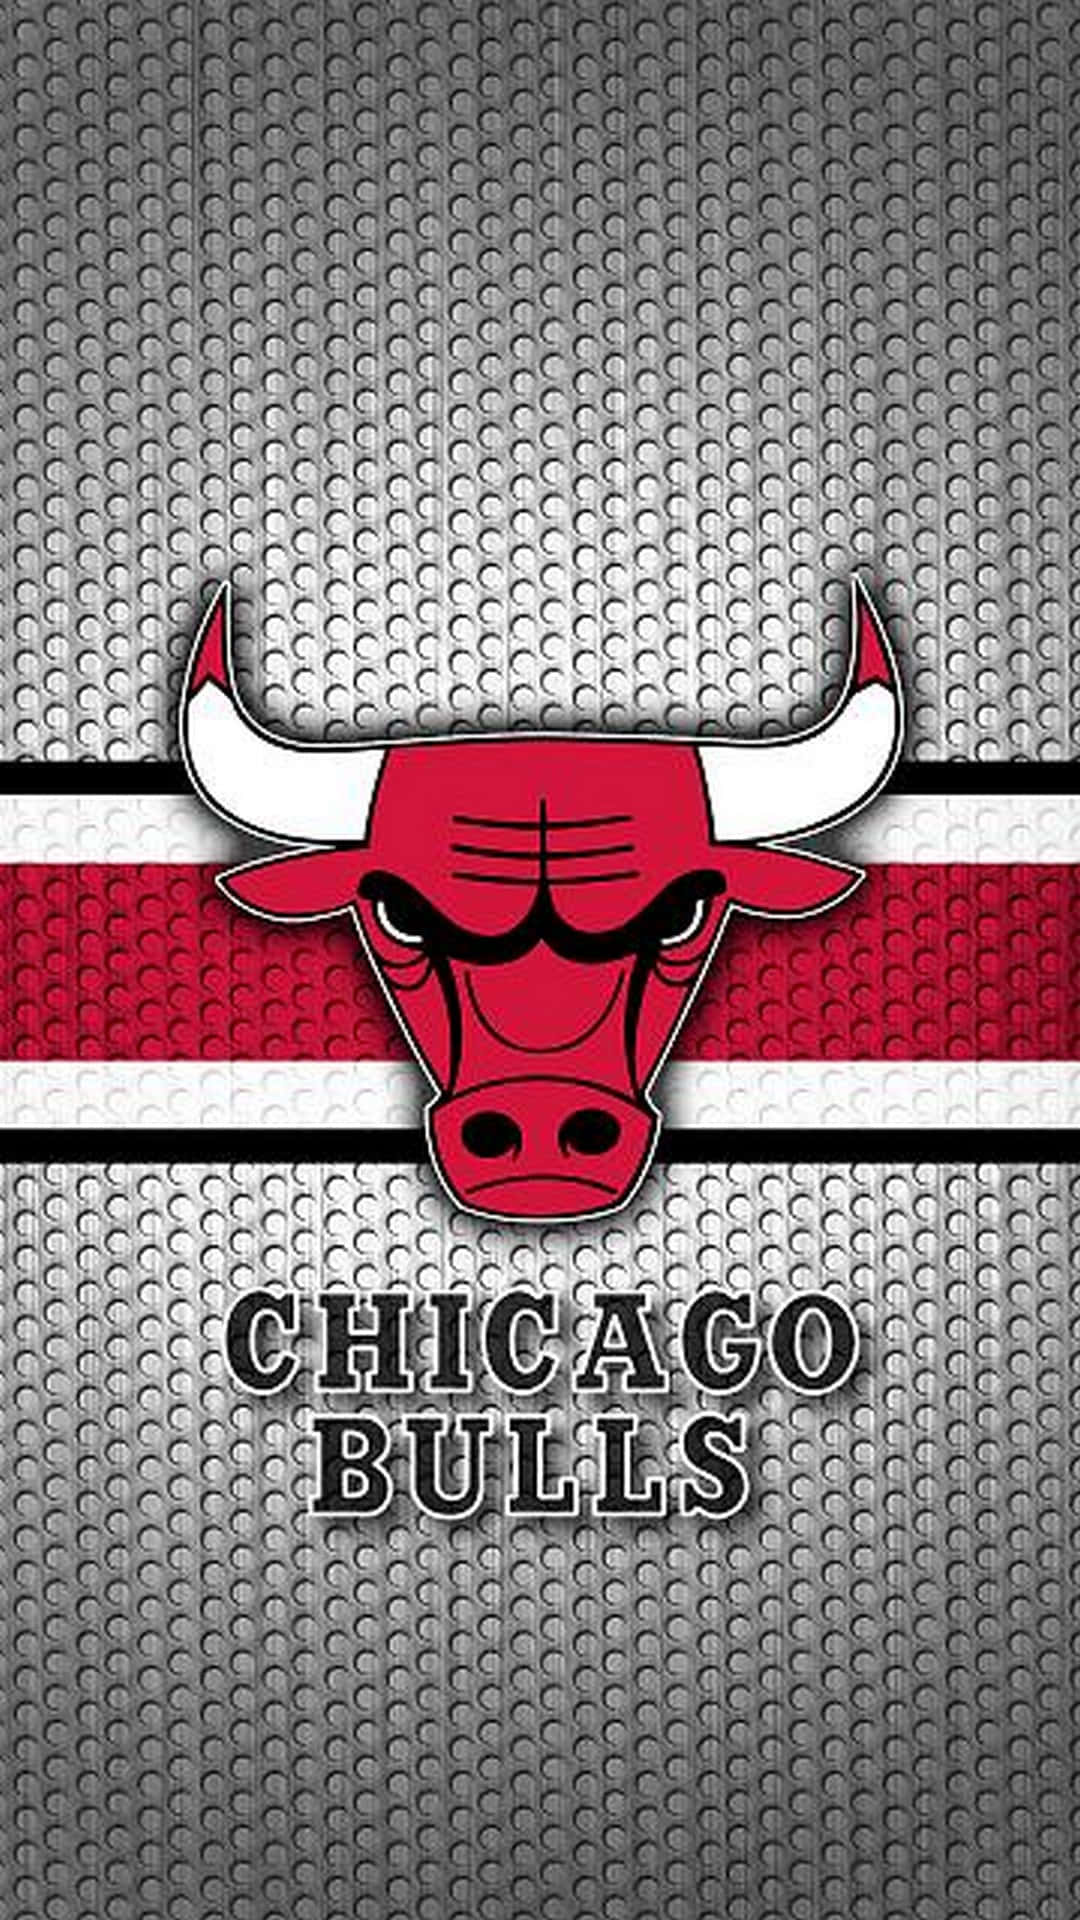 200+] Chicago Bulls Wallpapers | Wallpapers.com